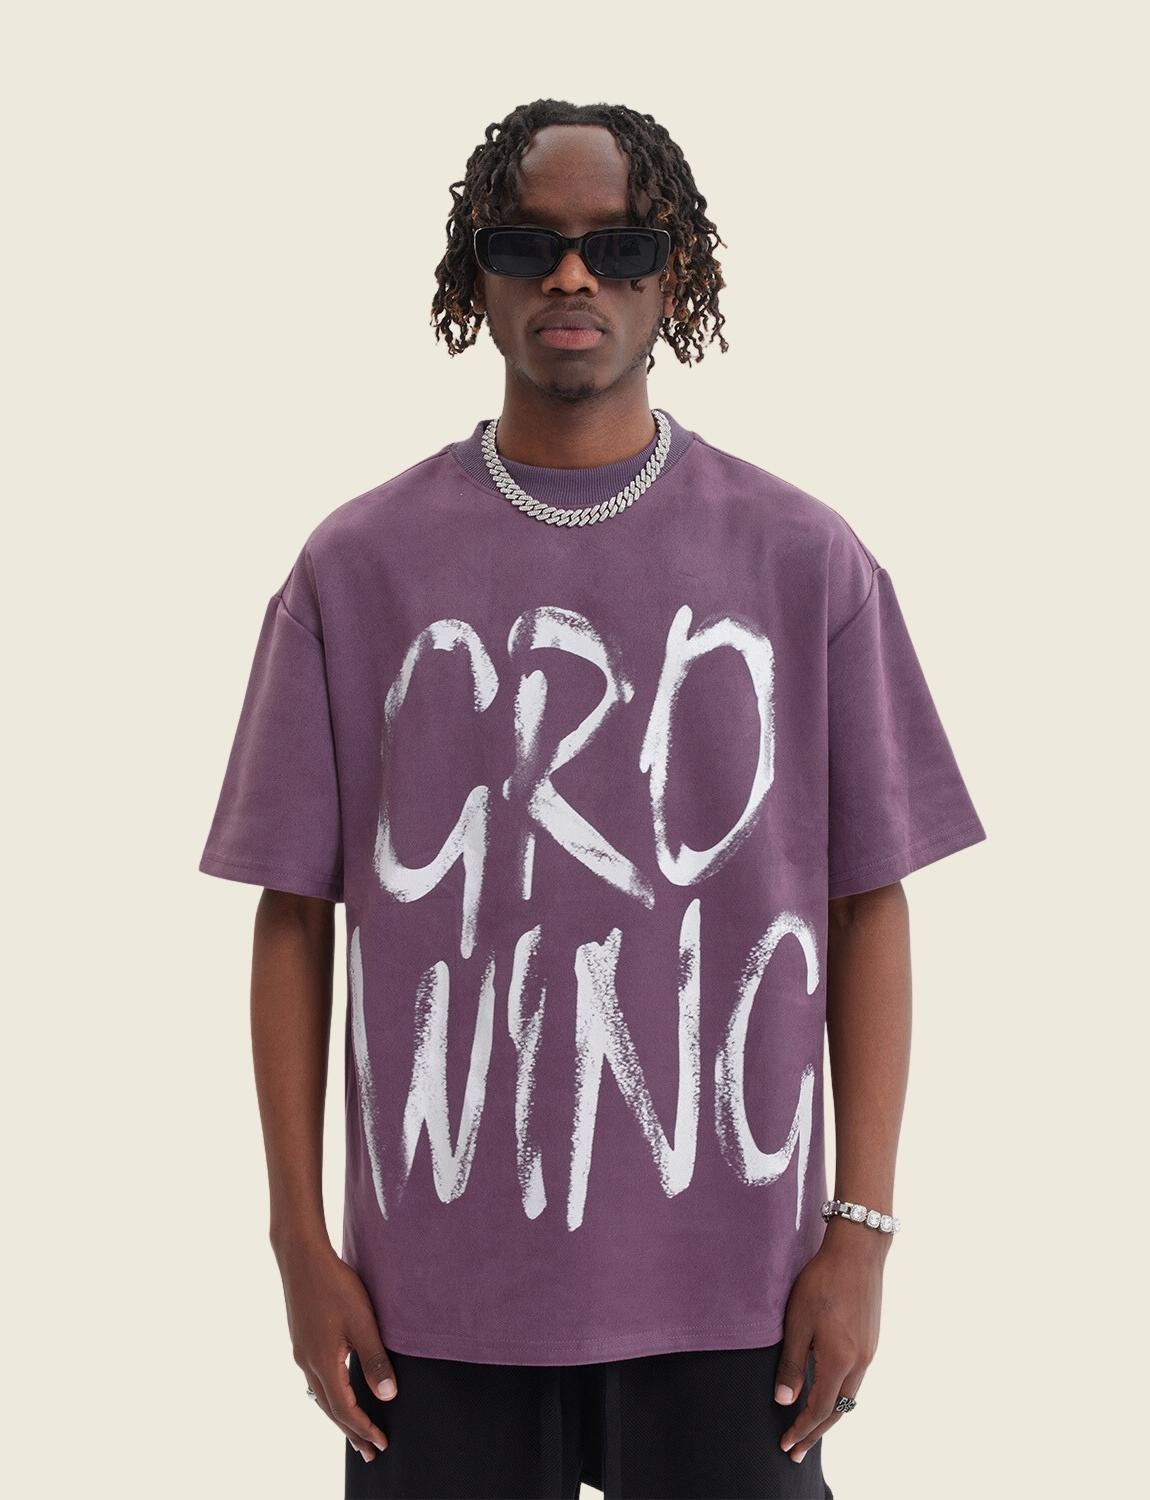 FSW® "GROWING" Distressed T-shirt